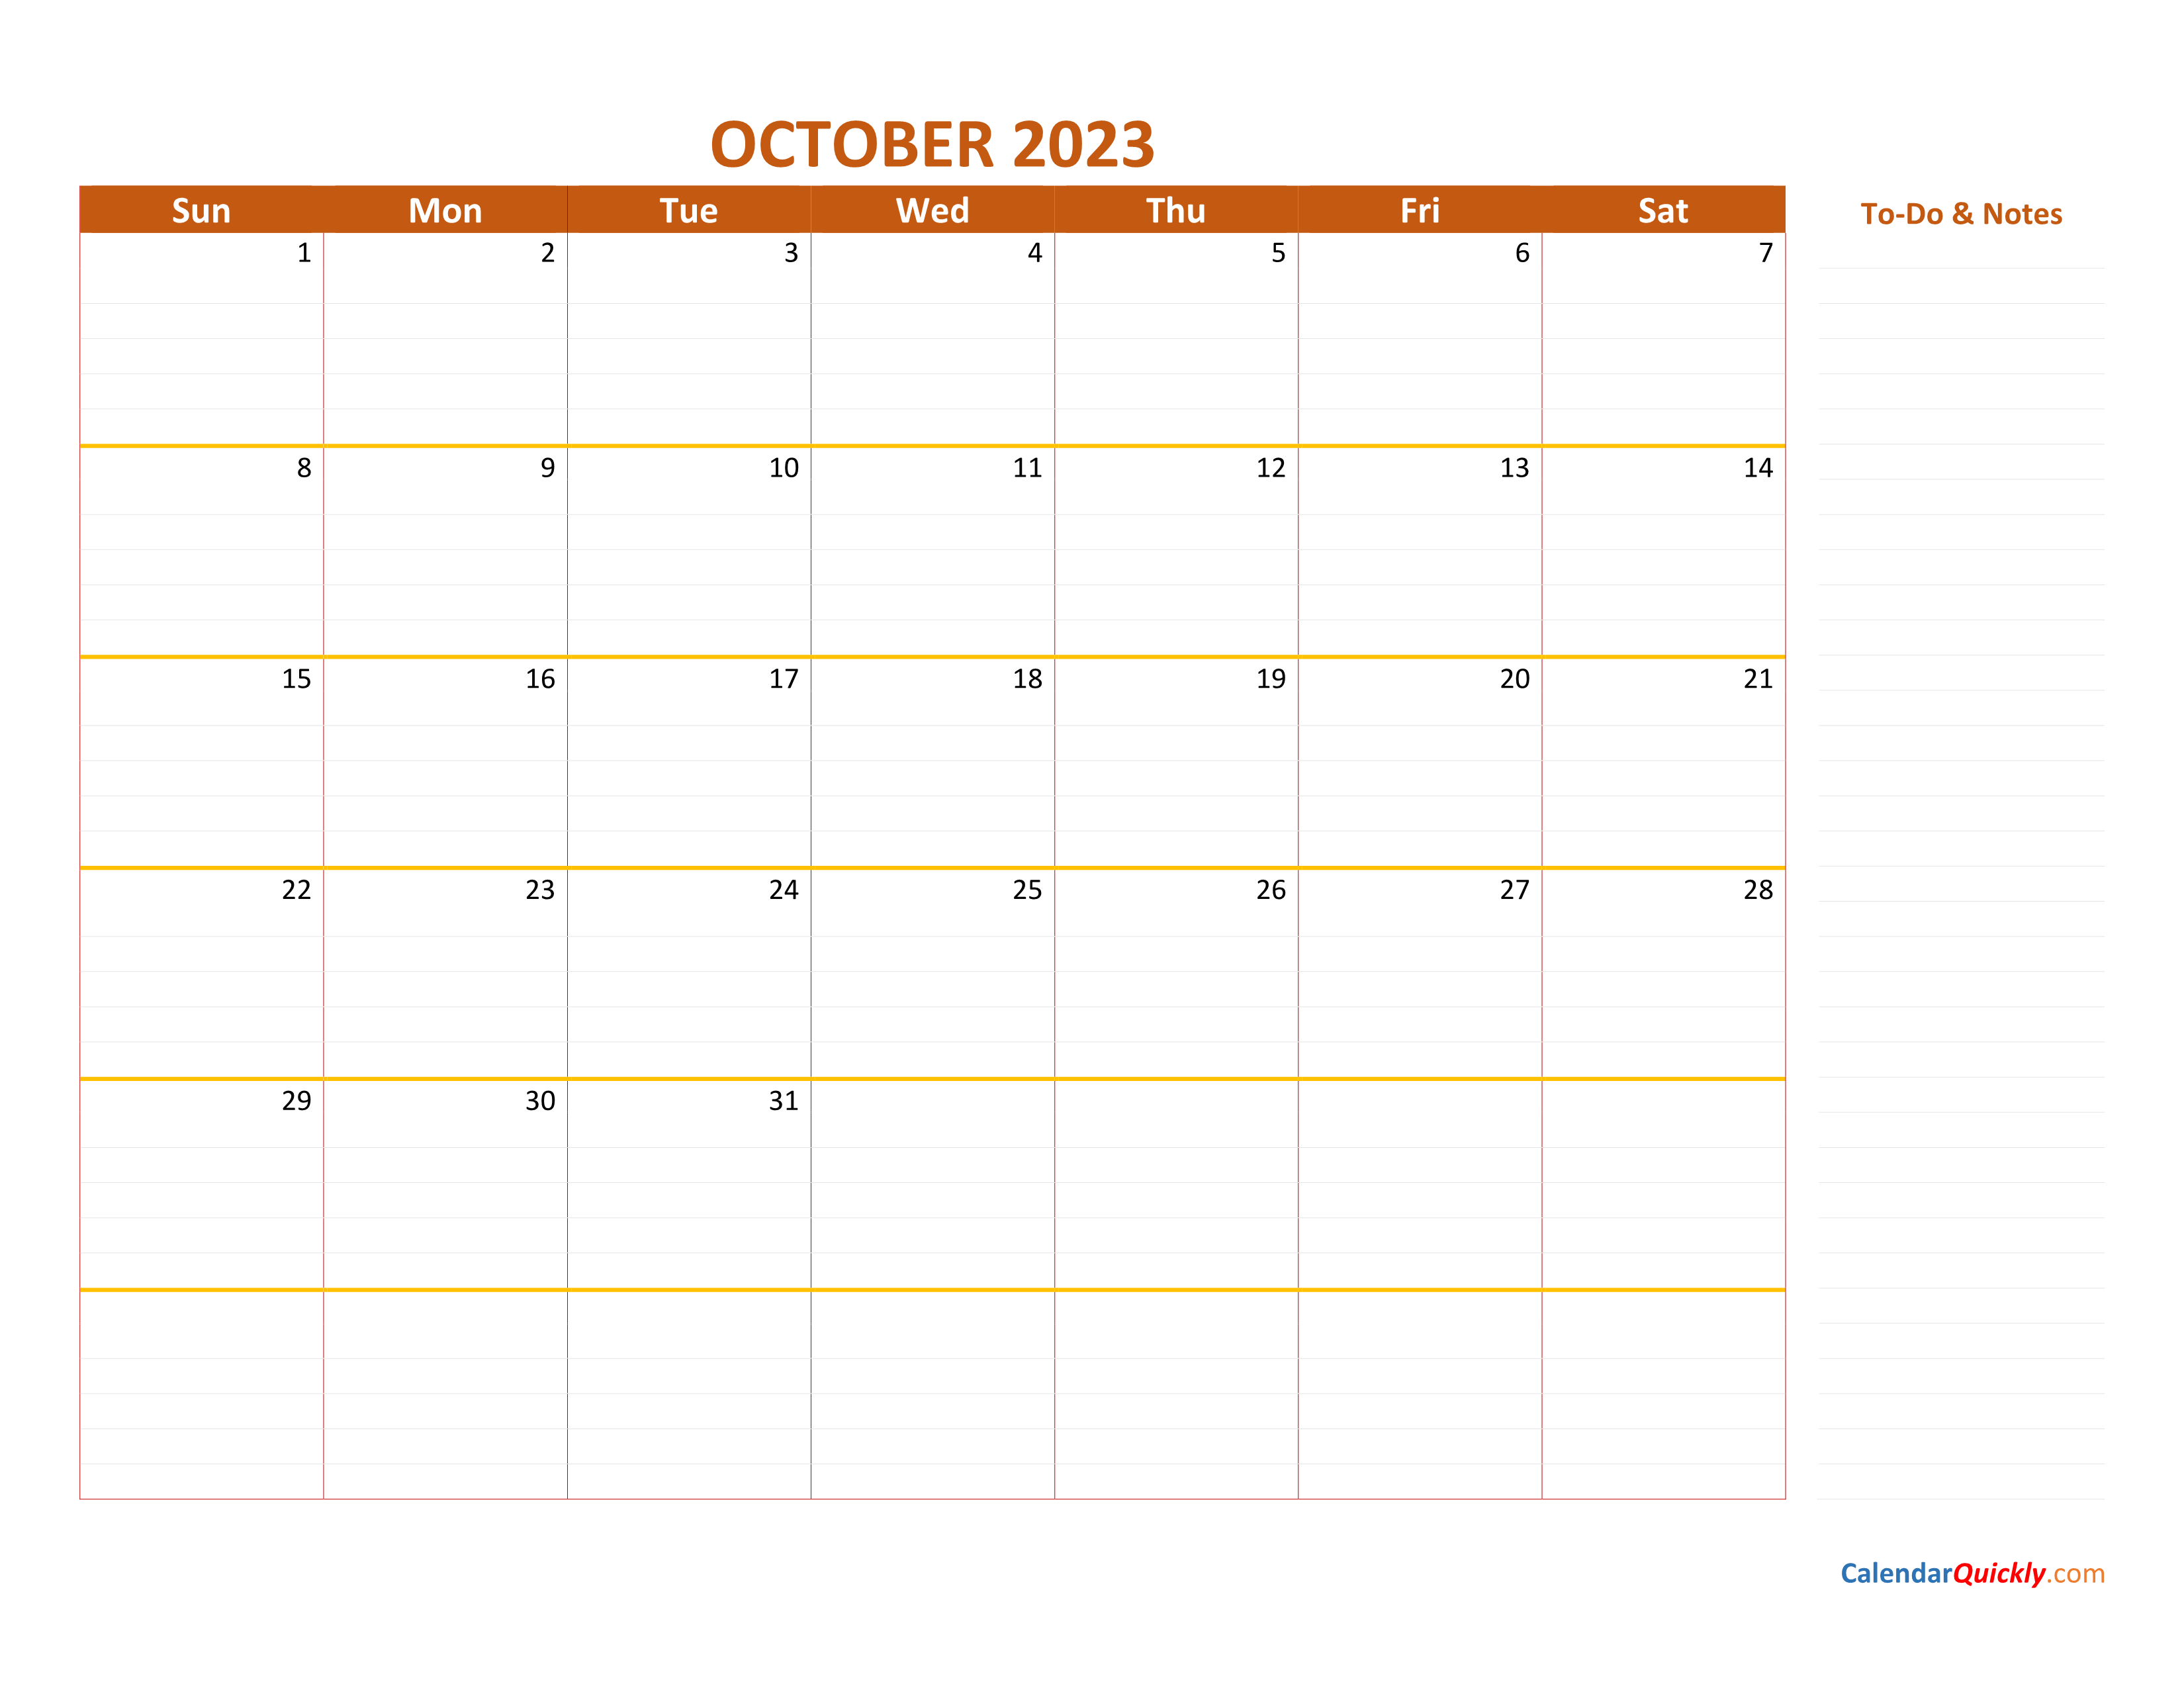 October 2023 Calendar Graphic Get Calendar 2023 Updat vrogue co